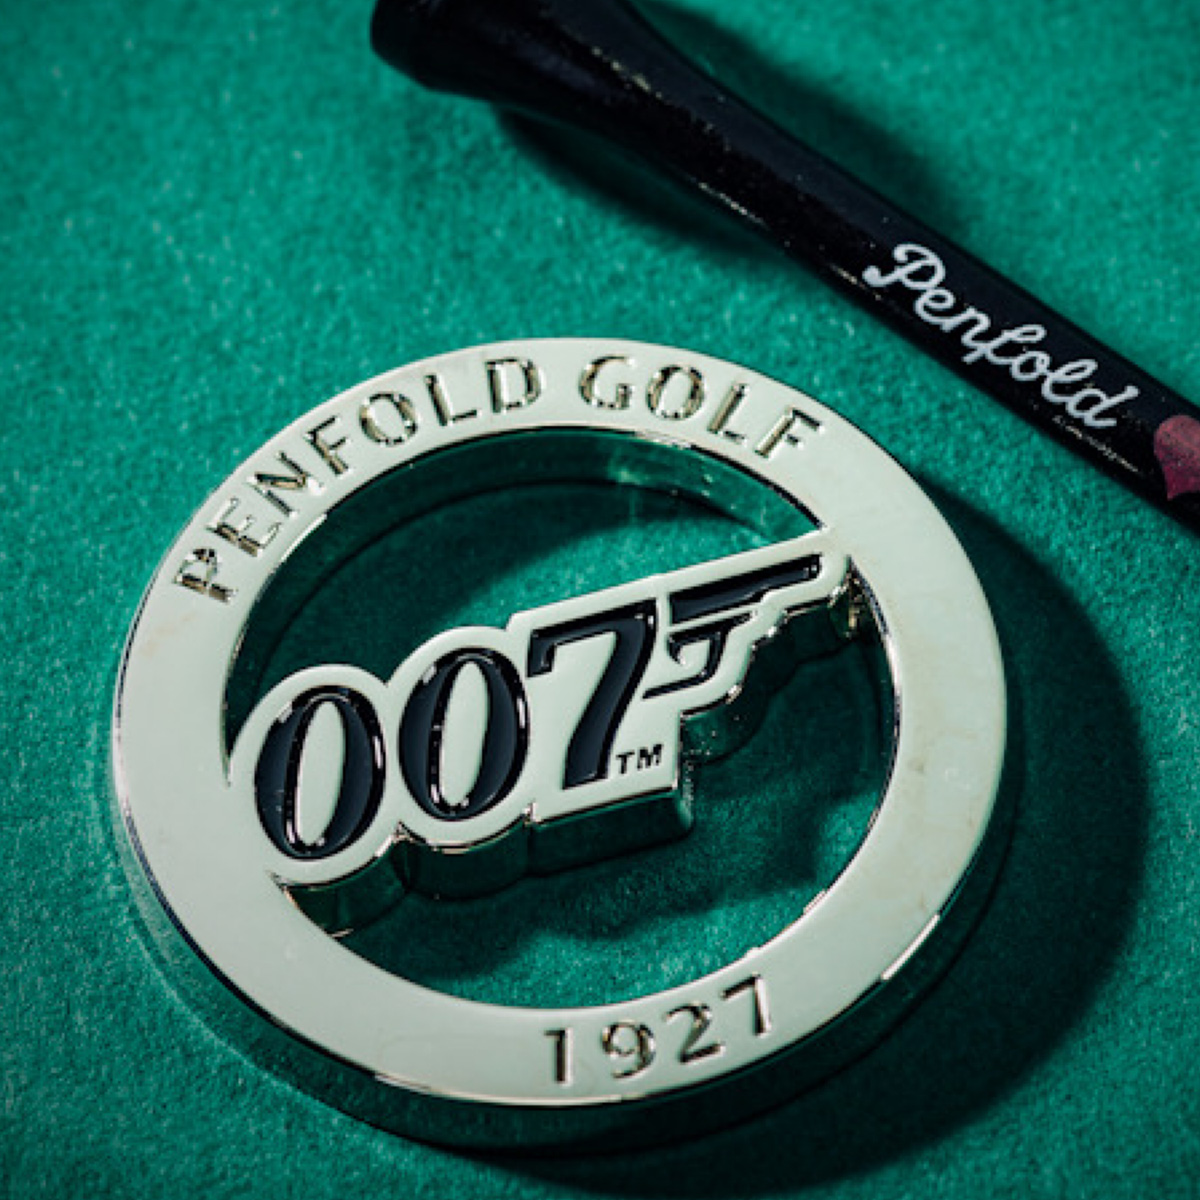 Penfold 007 golf marker